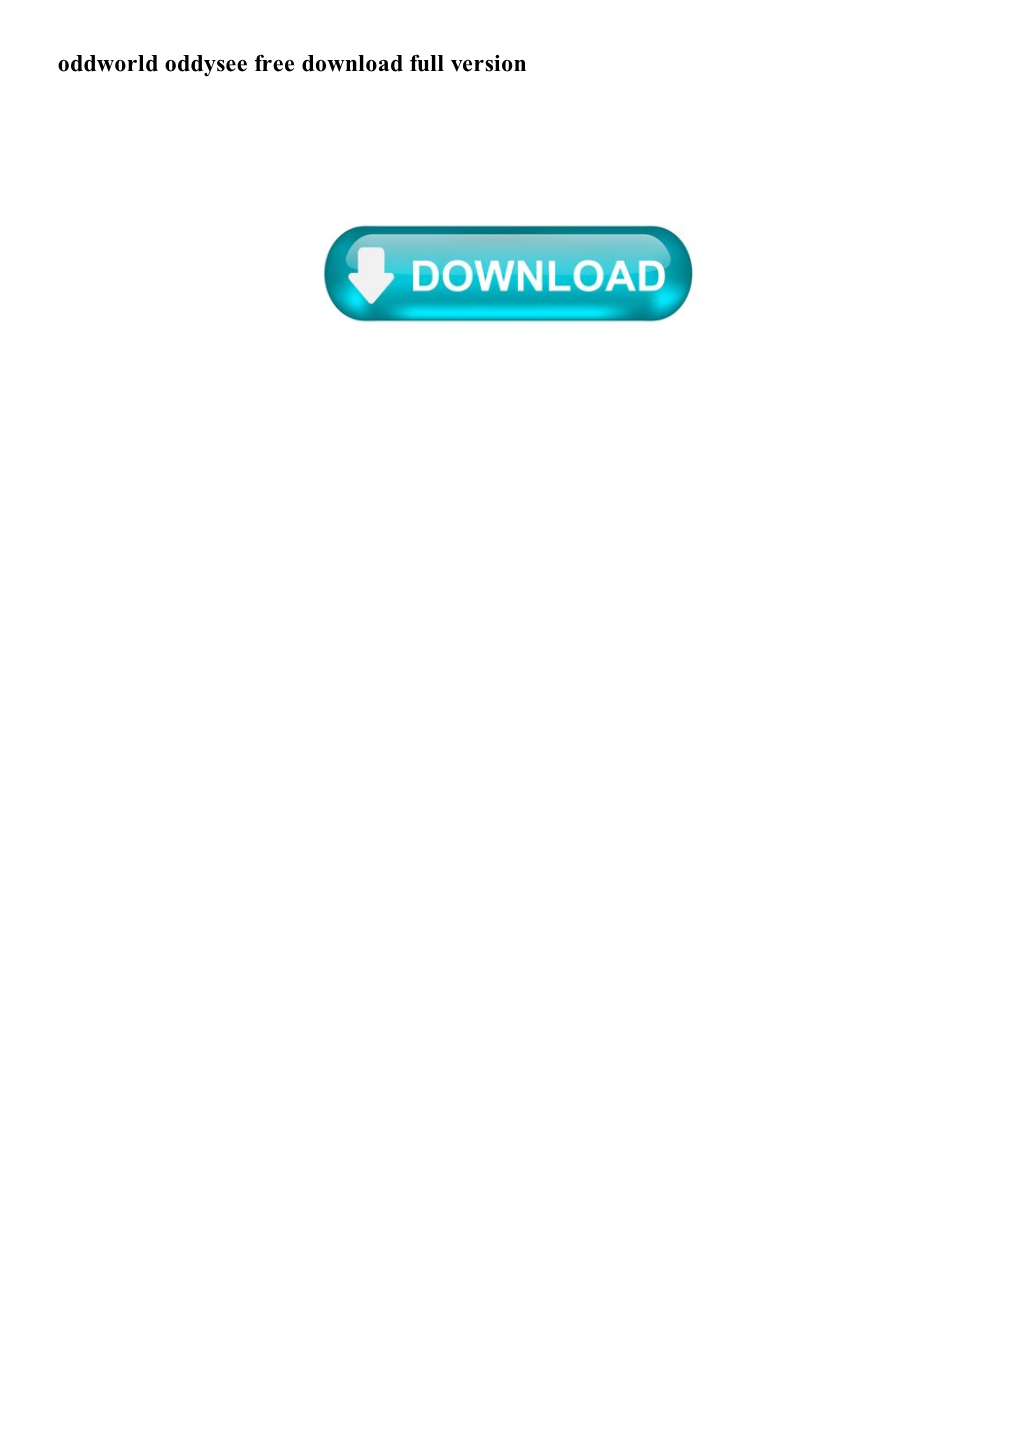 Oddworld Oddysee Free Download Full Version Oddworld: Abe's Oddysee